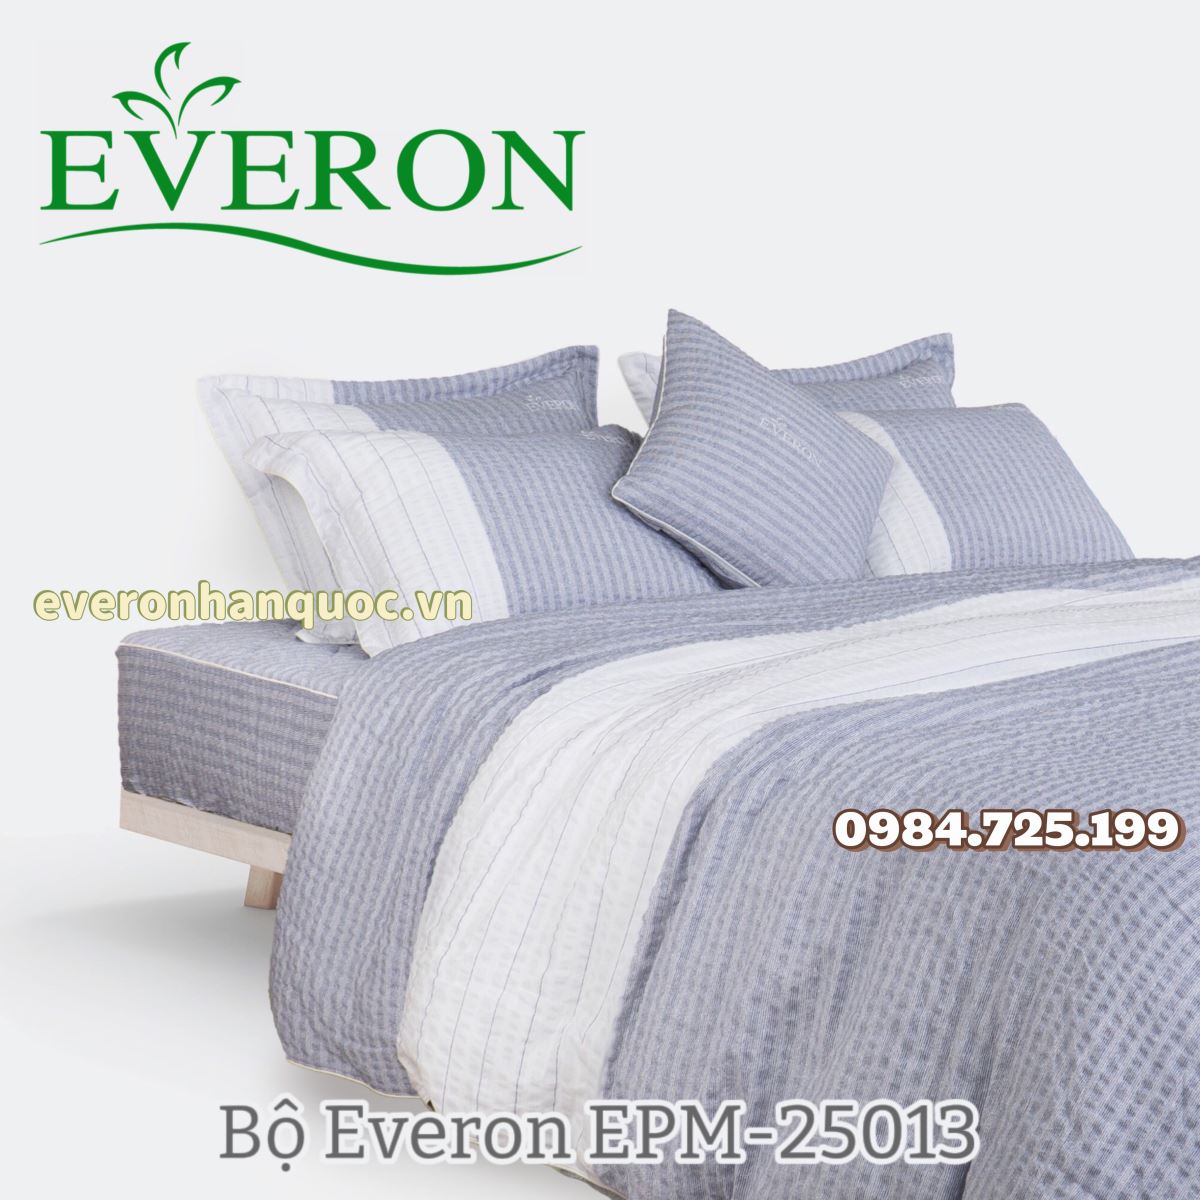 Bộ Chăn Ga Gối Everon EPM-25013